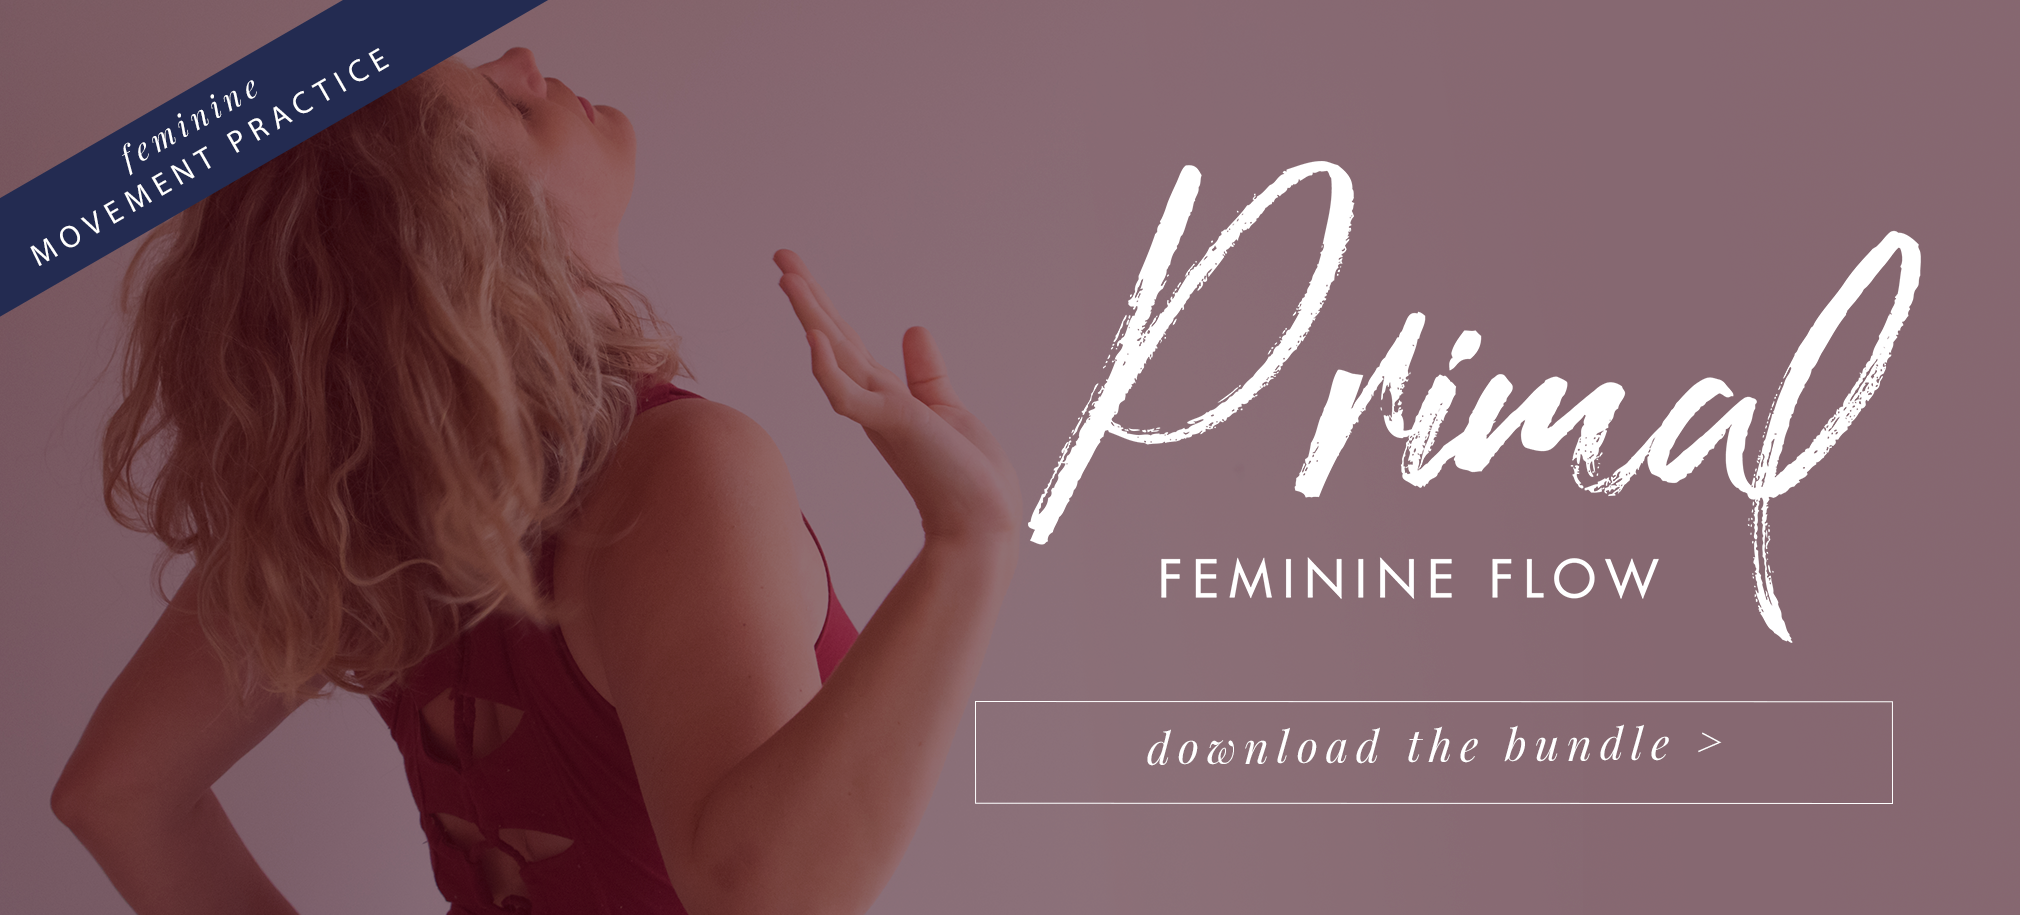 Redefining Pleasure: 3 of my Current Pleasure Practices - Jenna Ward  Feminine Embodiment Coach & Founder SOEA